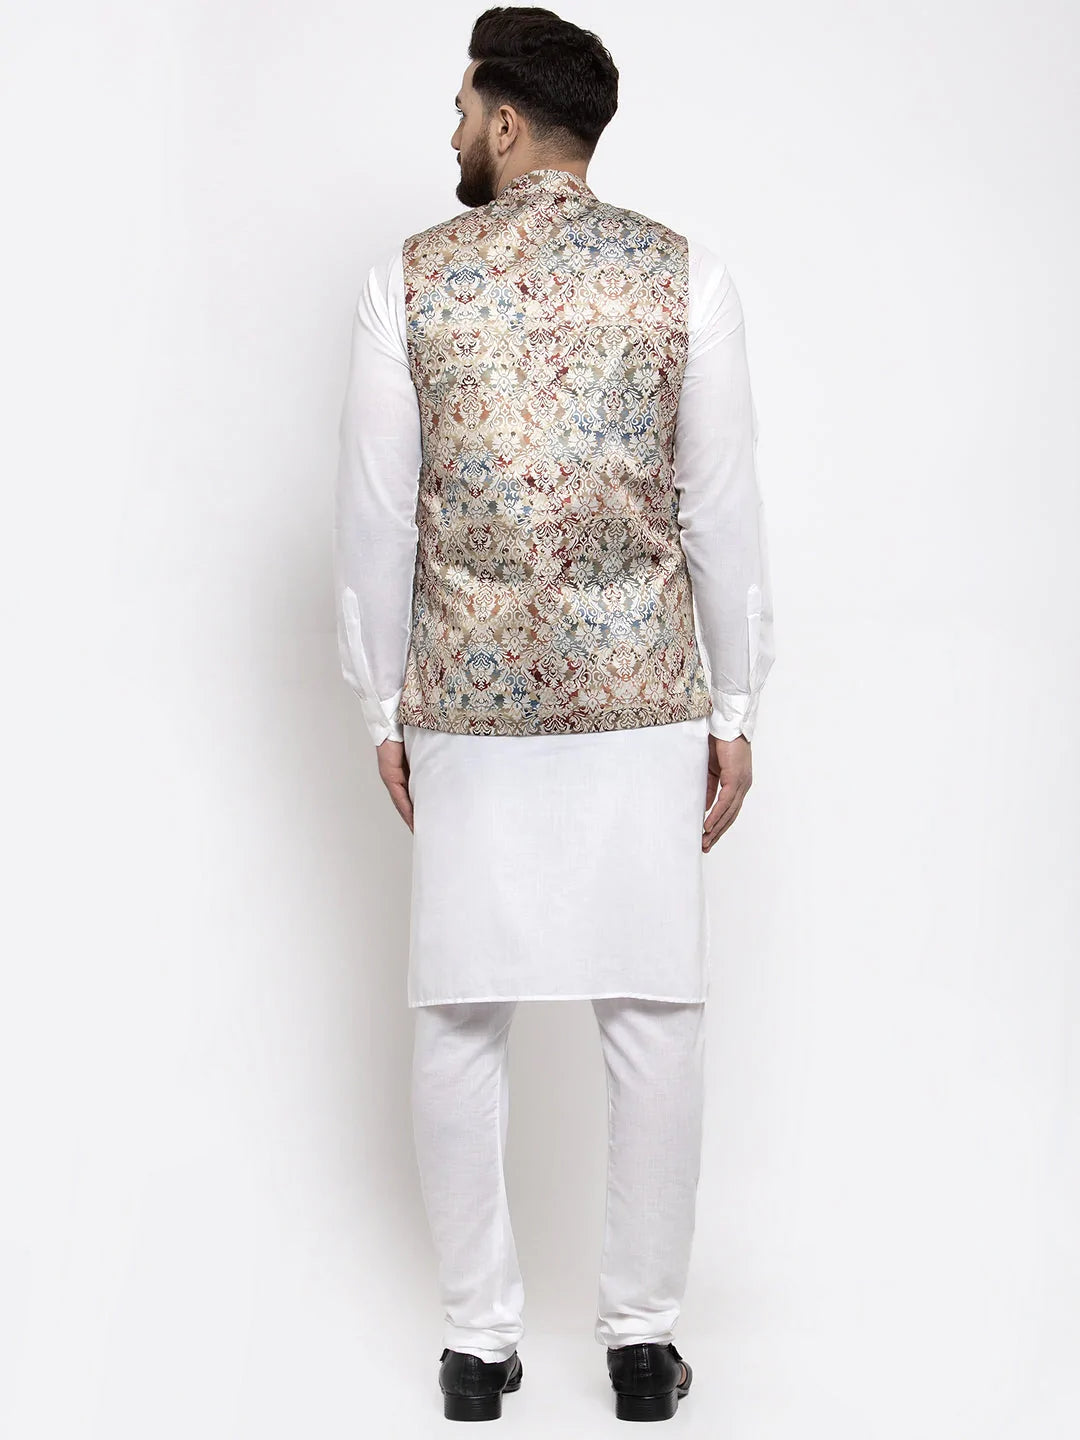 Jompers Men's Solid Cotton Kurta Pajama with Printed Waistcoat ( JOKP WC 4058 Multi-W )